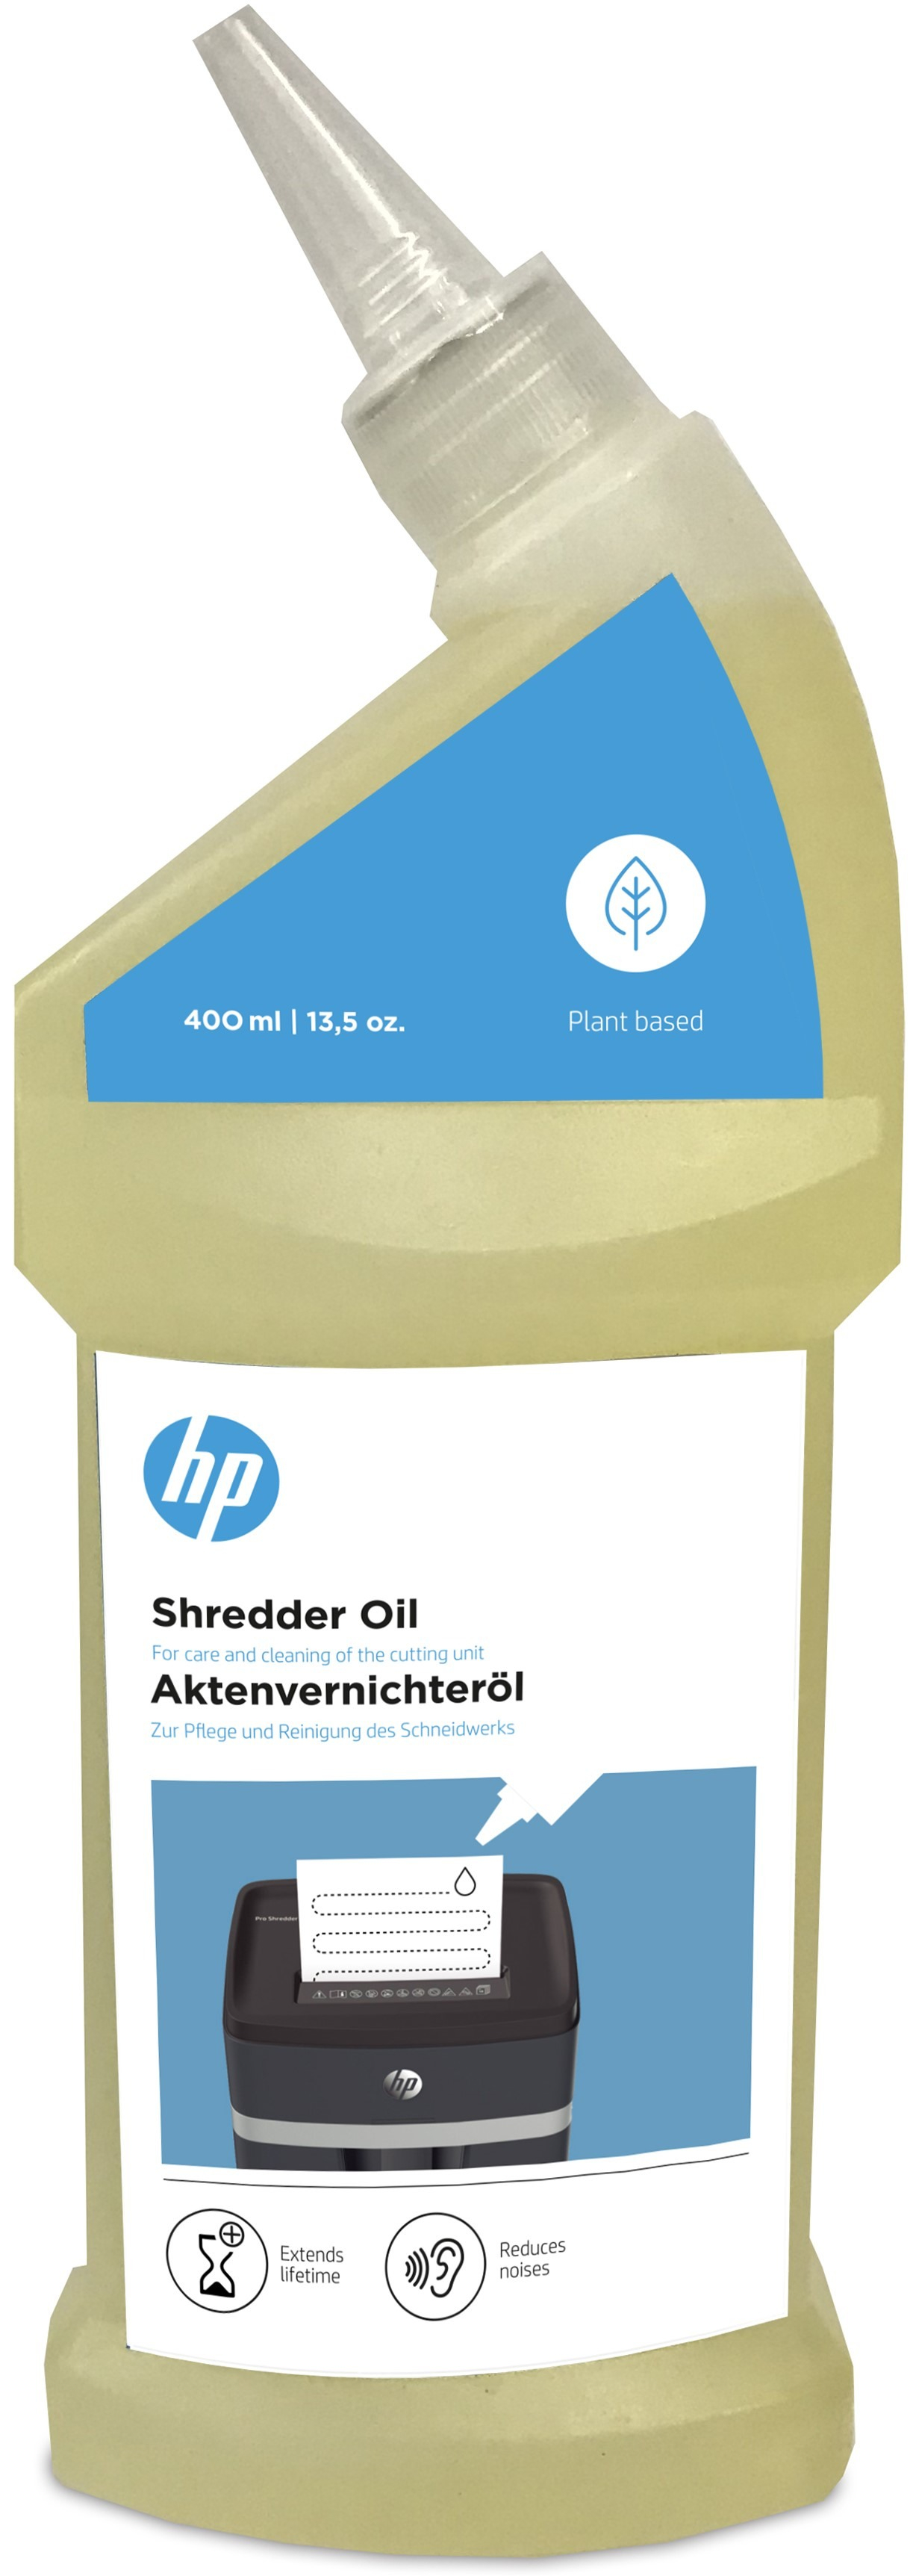 HP Aktenvernichter Öl 9132 400ml